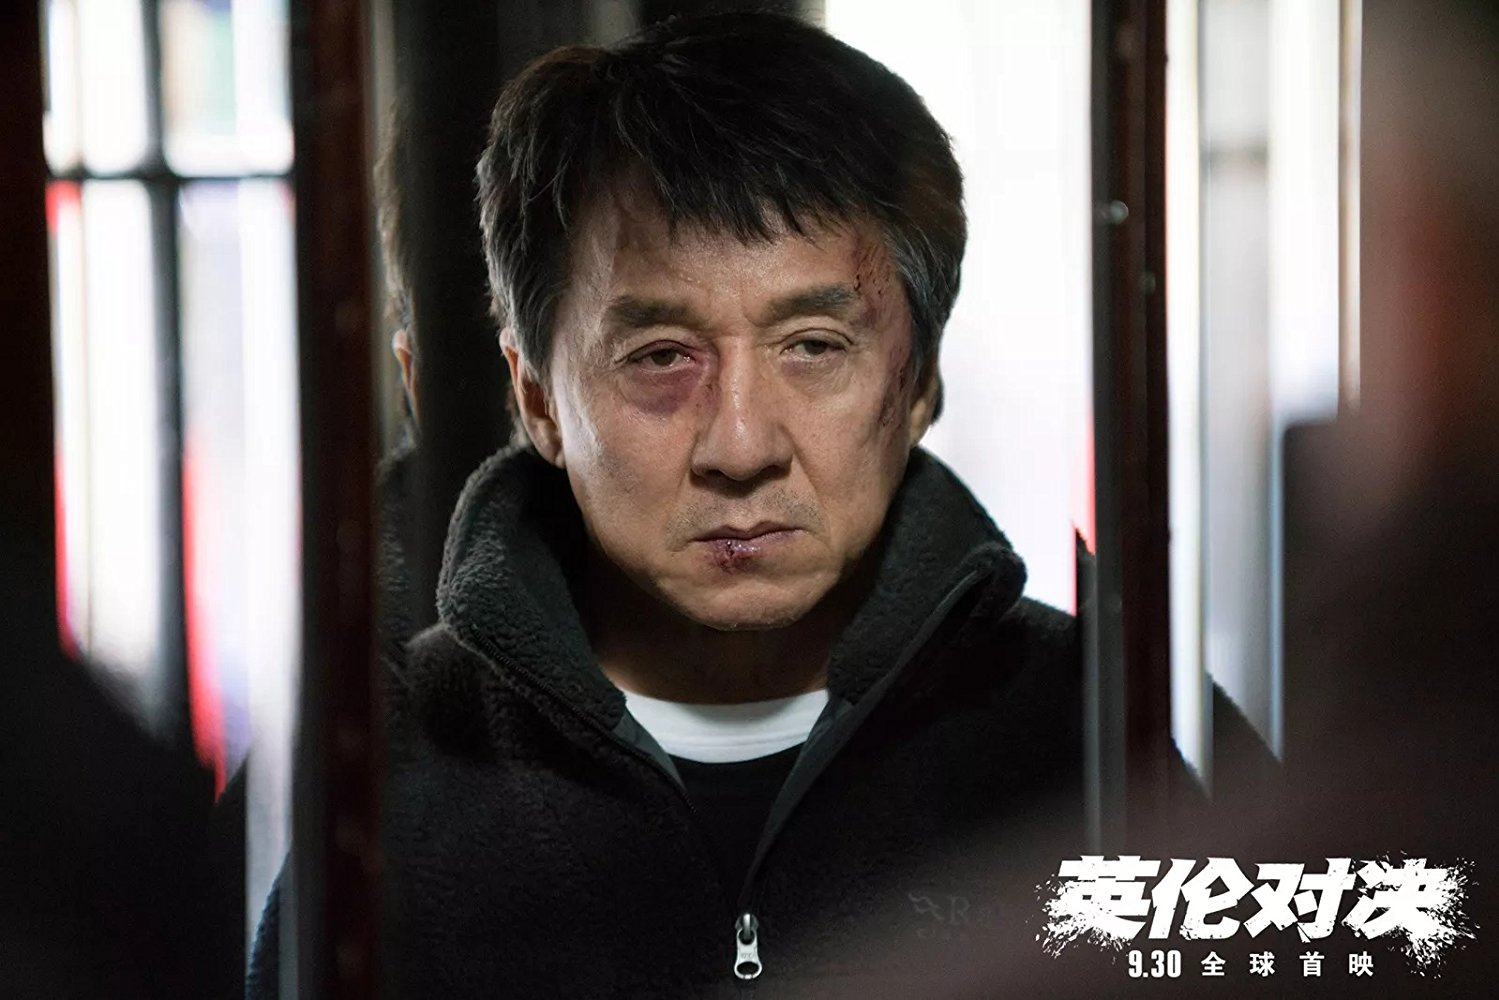 (تصویر) چهره جکی چان در سن 63 سالگی